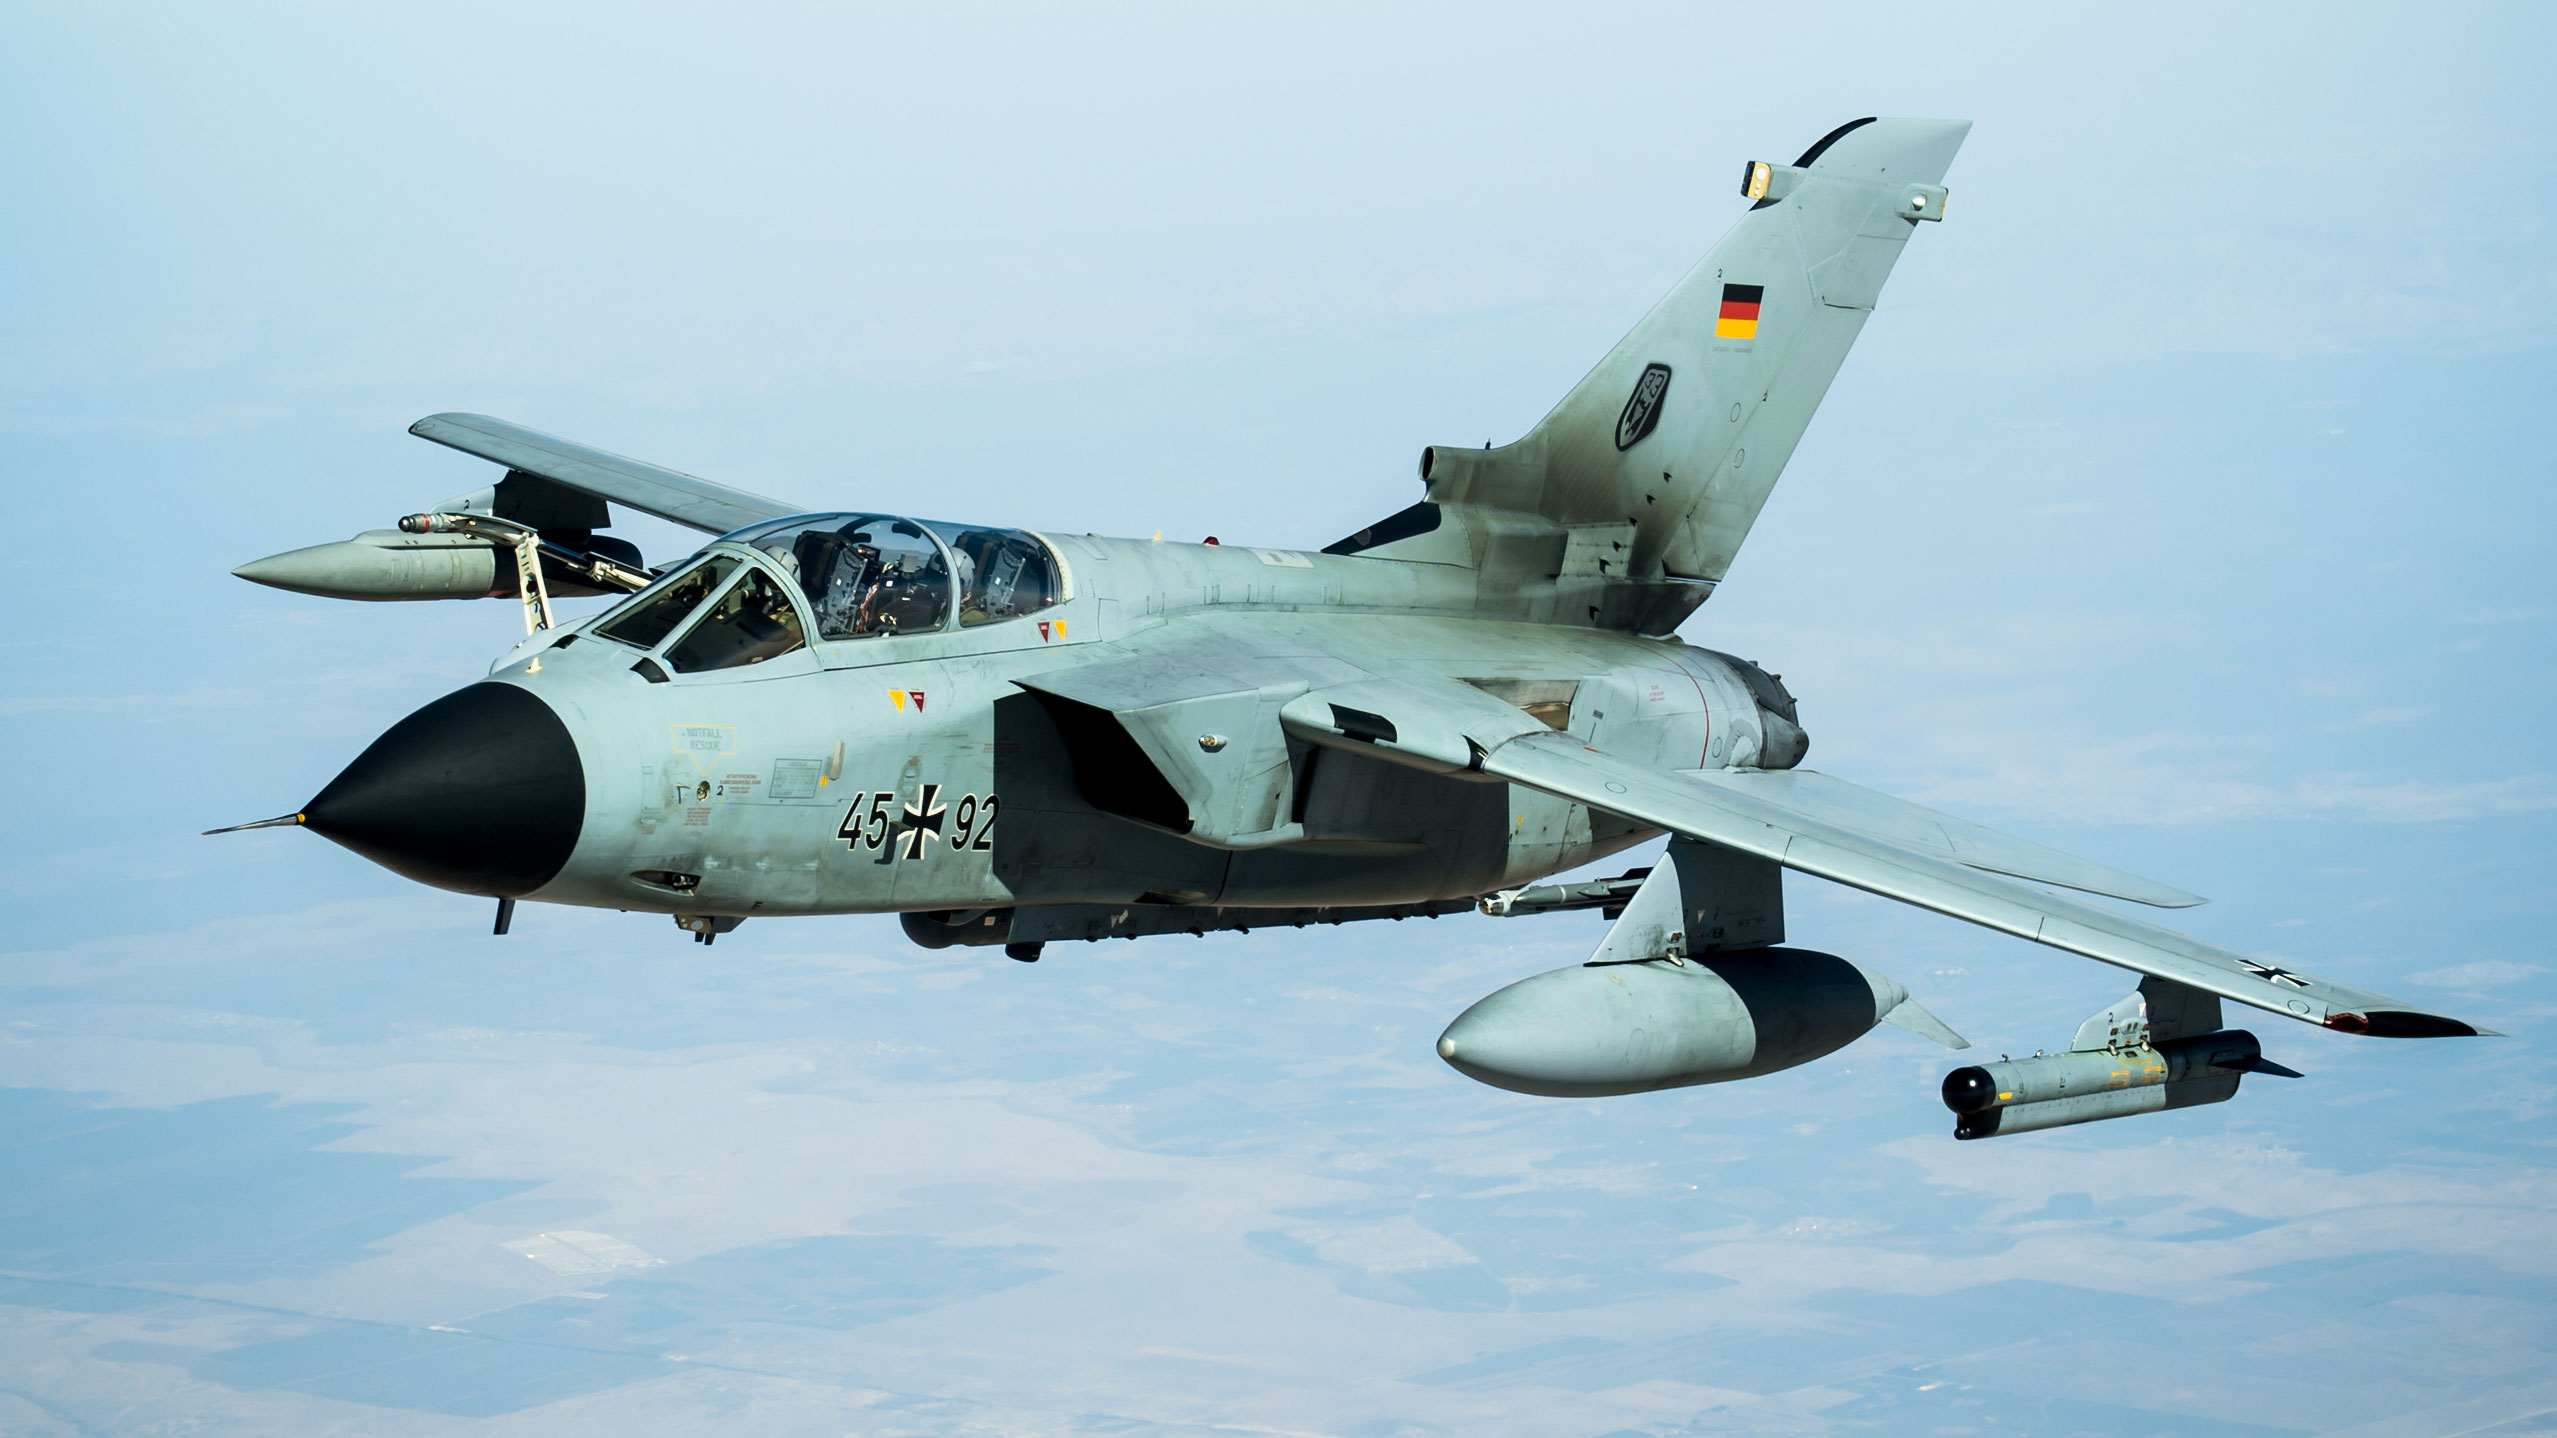 German Luftwaffe Tornado GR4